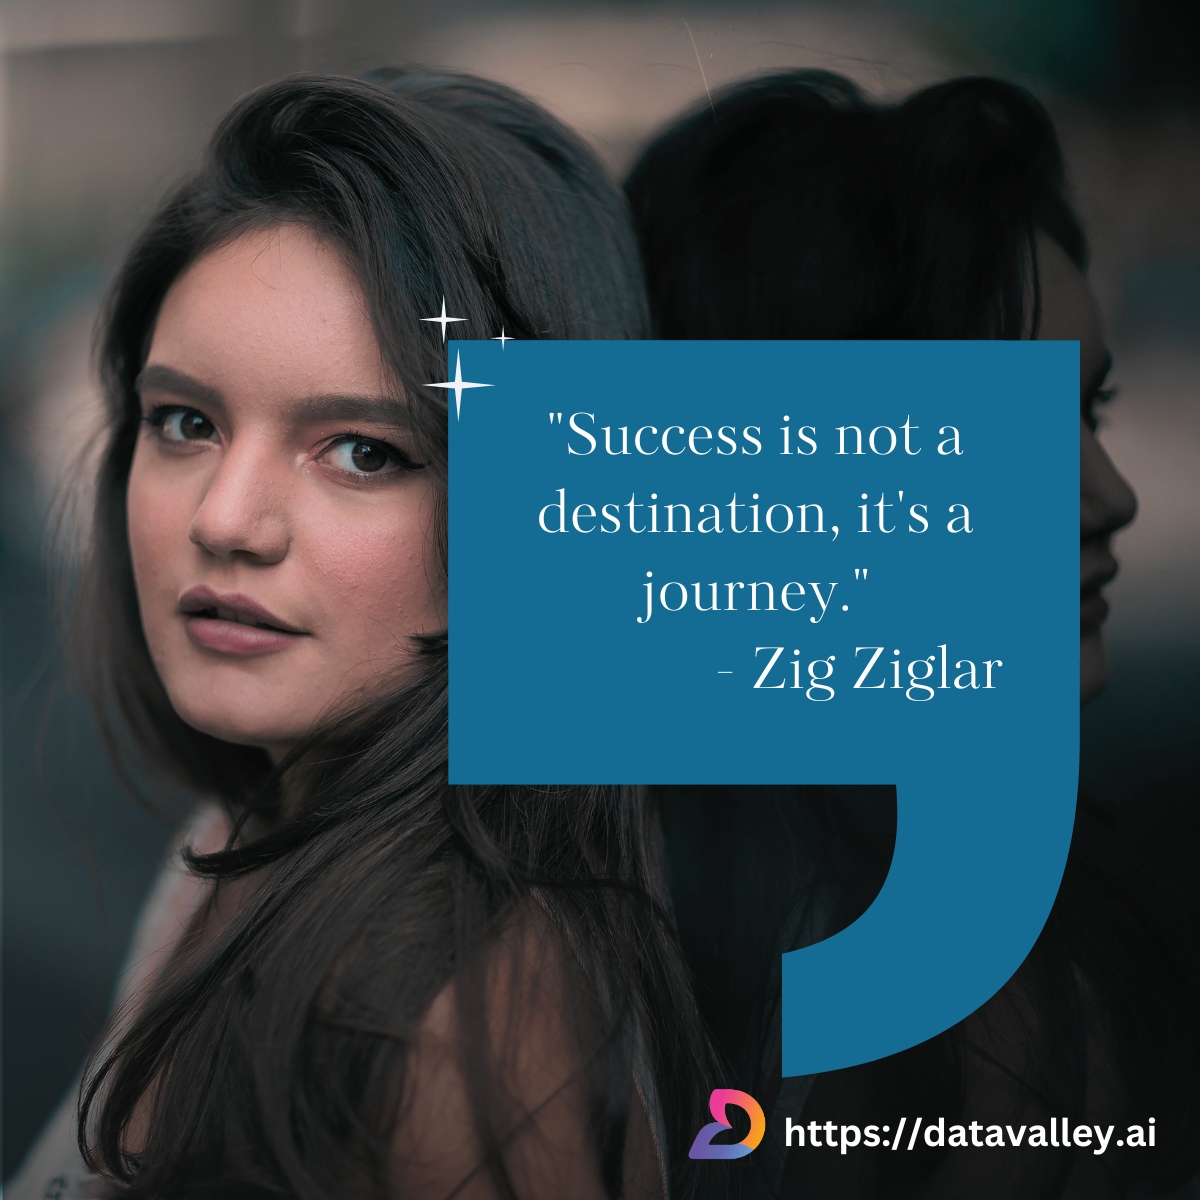 'Success is not a destination, it's a journey.'
 - Zig Ziglar
#SuccessJourney #ZiglarWisdom #EmbraceTheProcess #GrowthMindset #ContinuousImprovement #UnleashYourPotential #AchieveGreatness